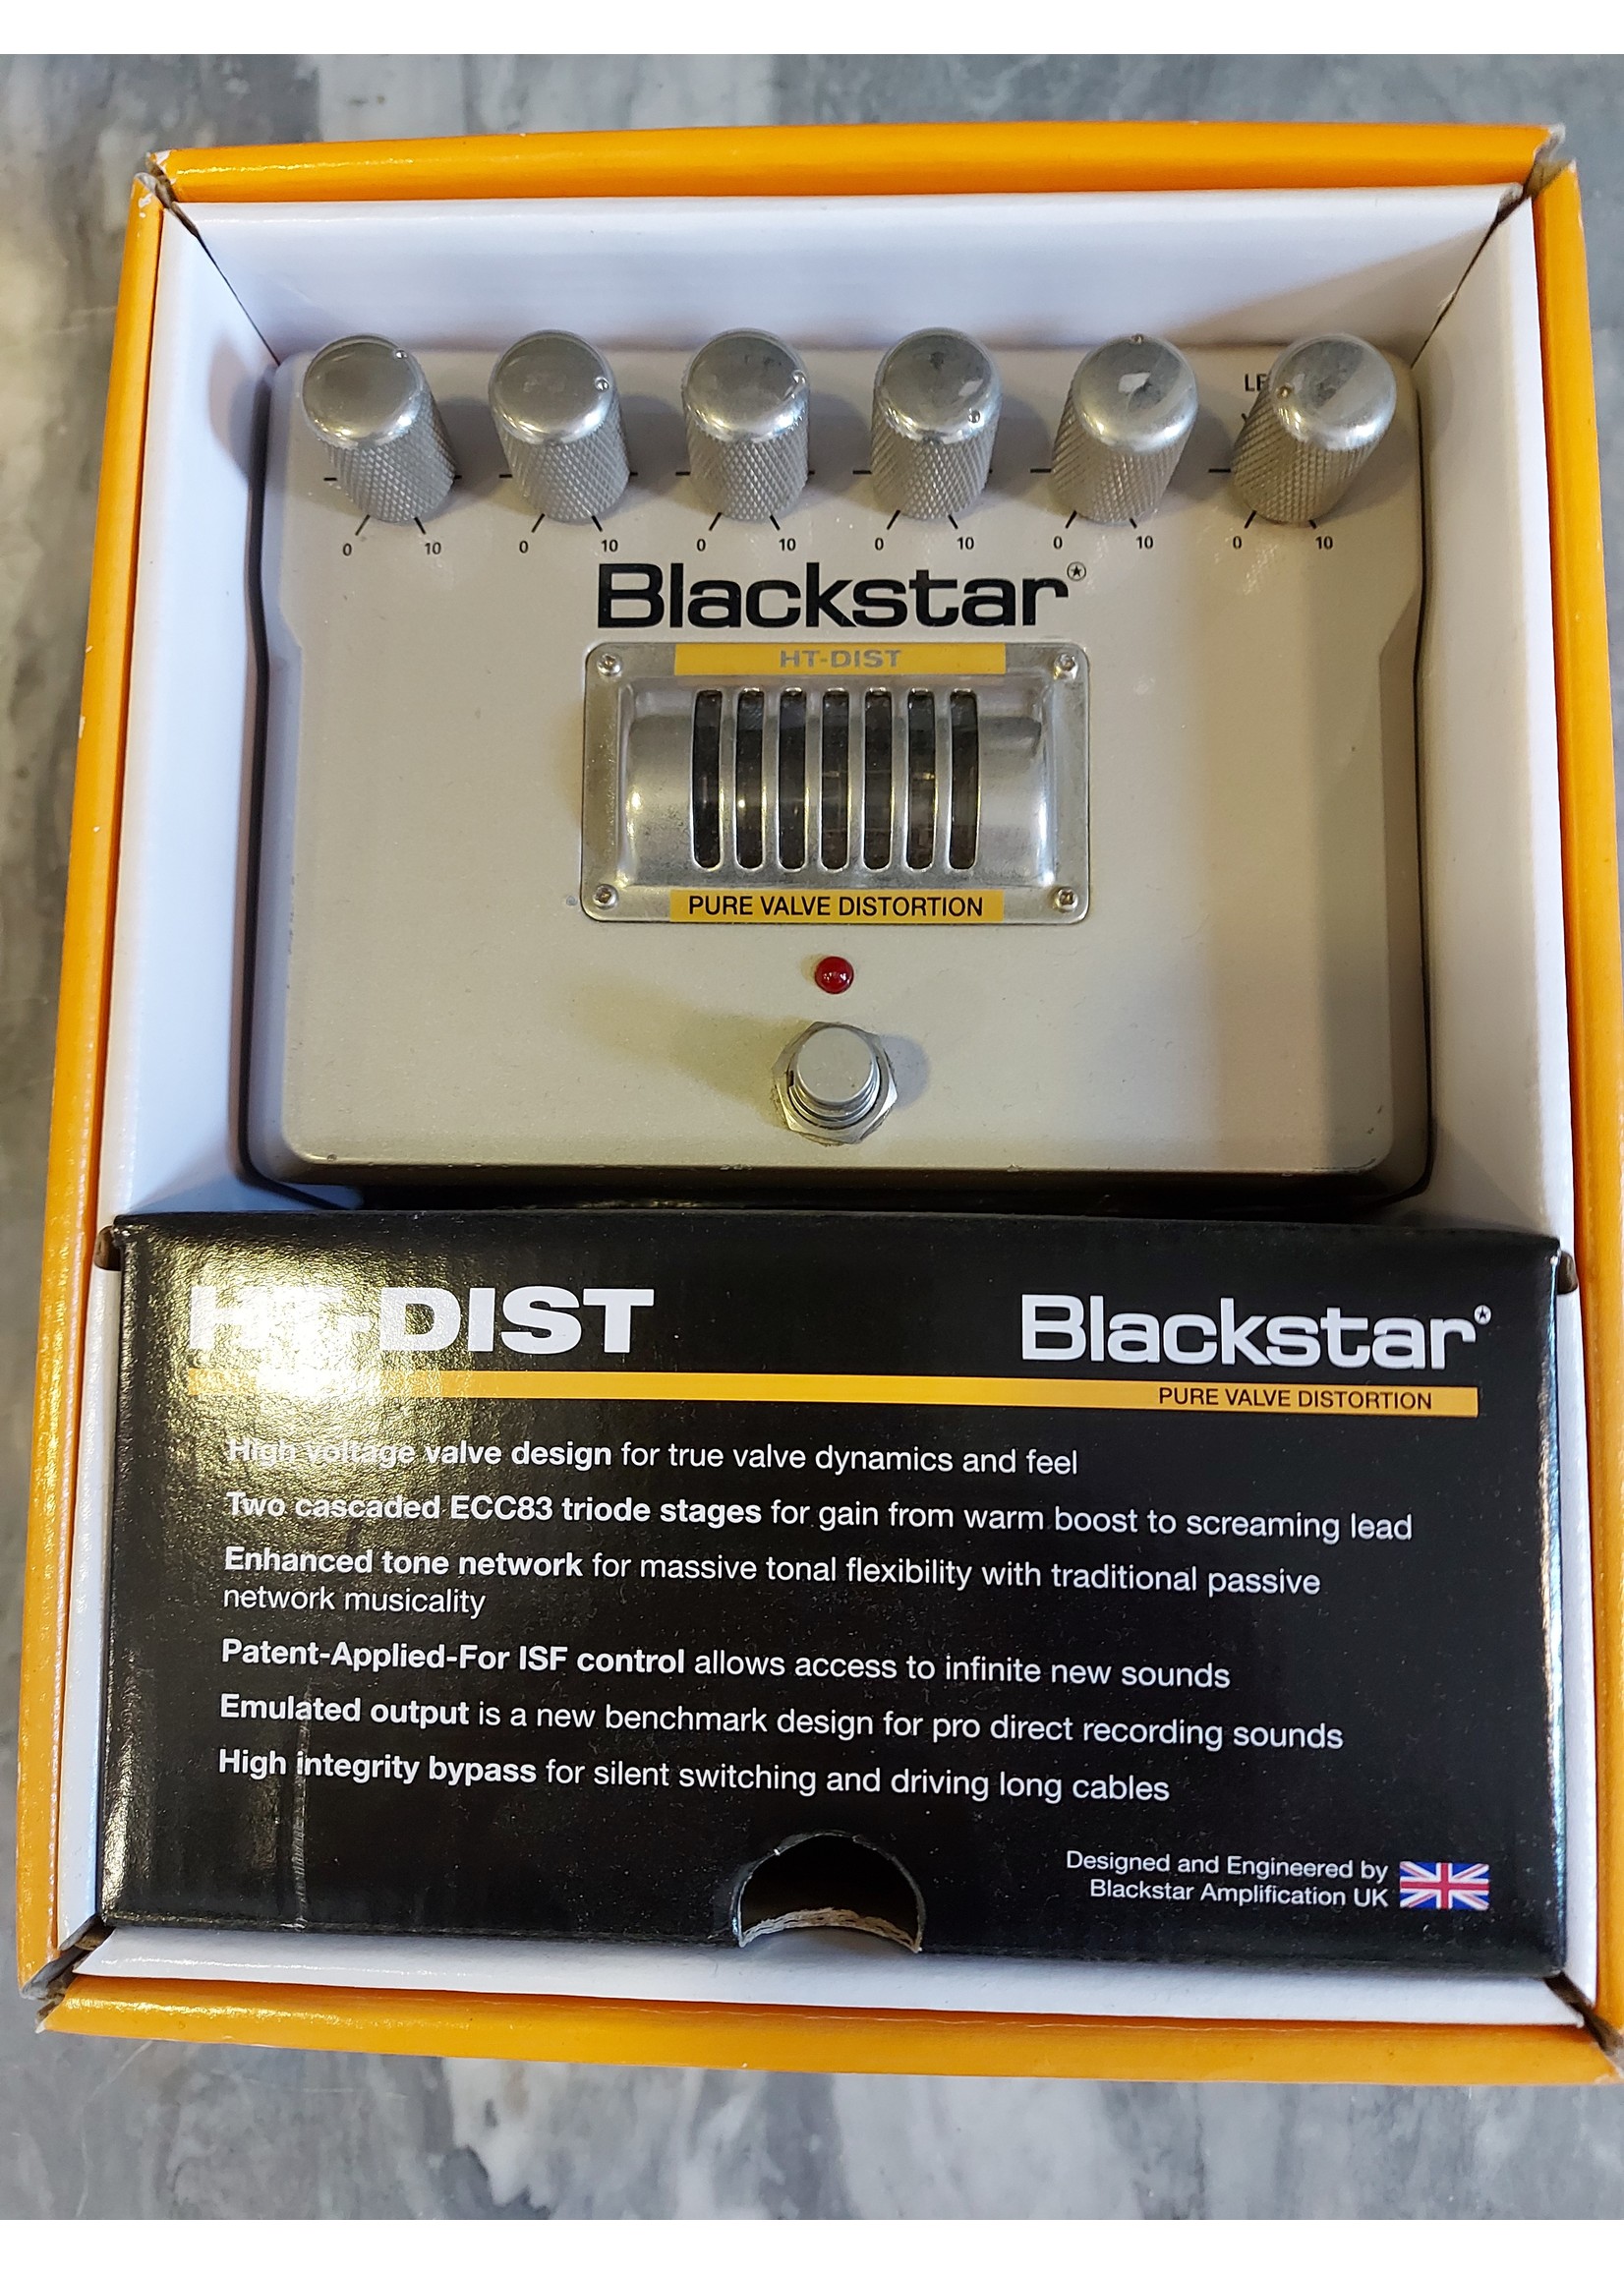 Blackstar Ht-Dist Pure valve Distortion Occasion